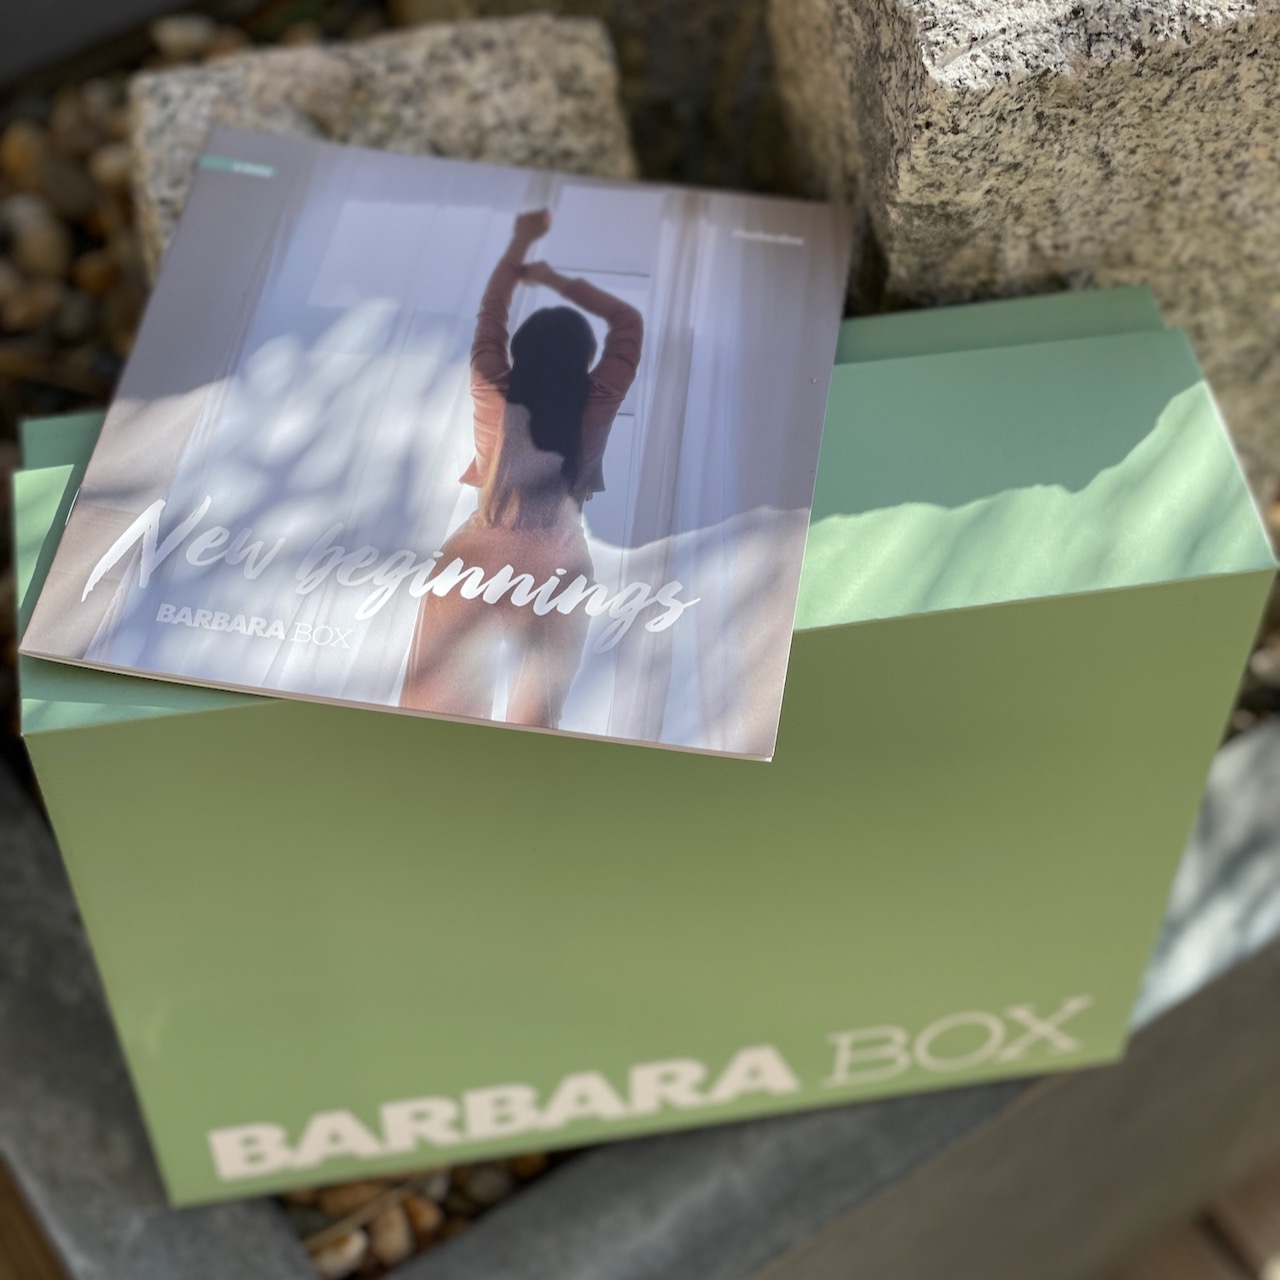 BARBARA BOX – New Beginnings